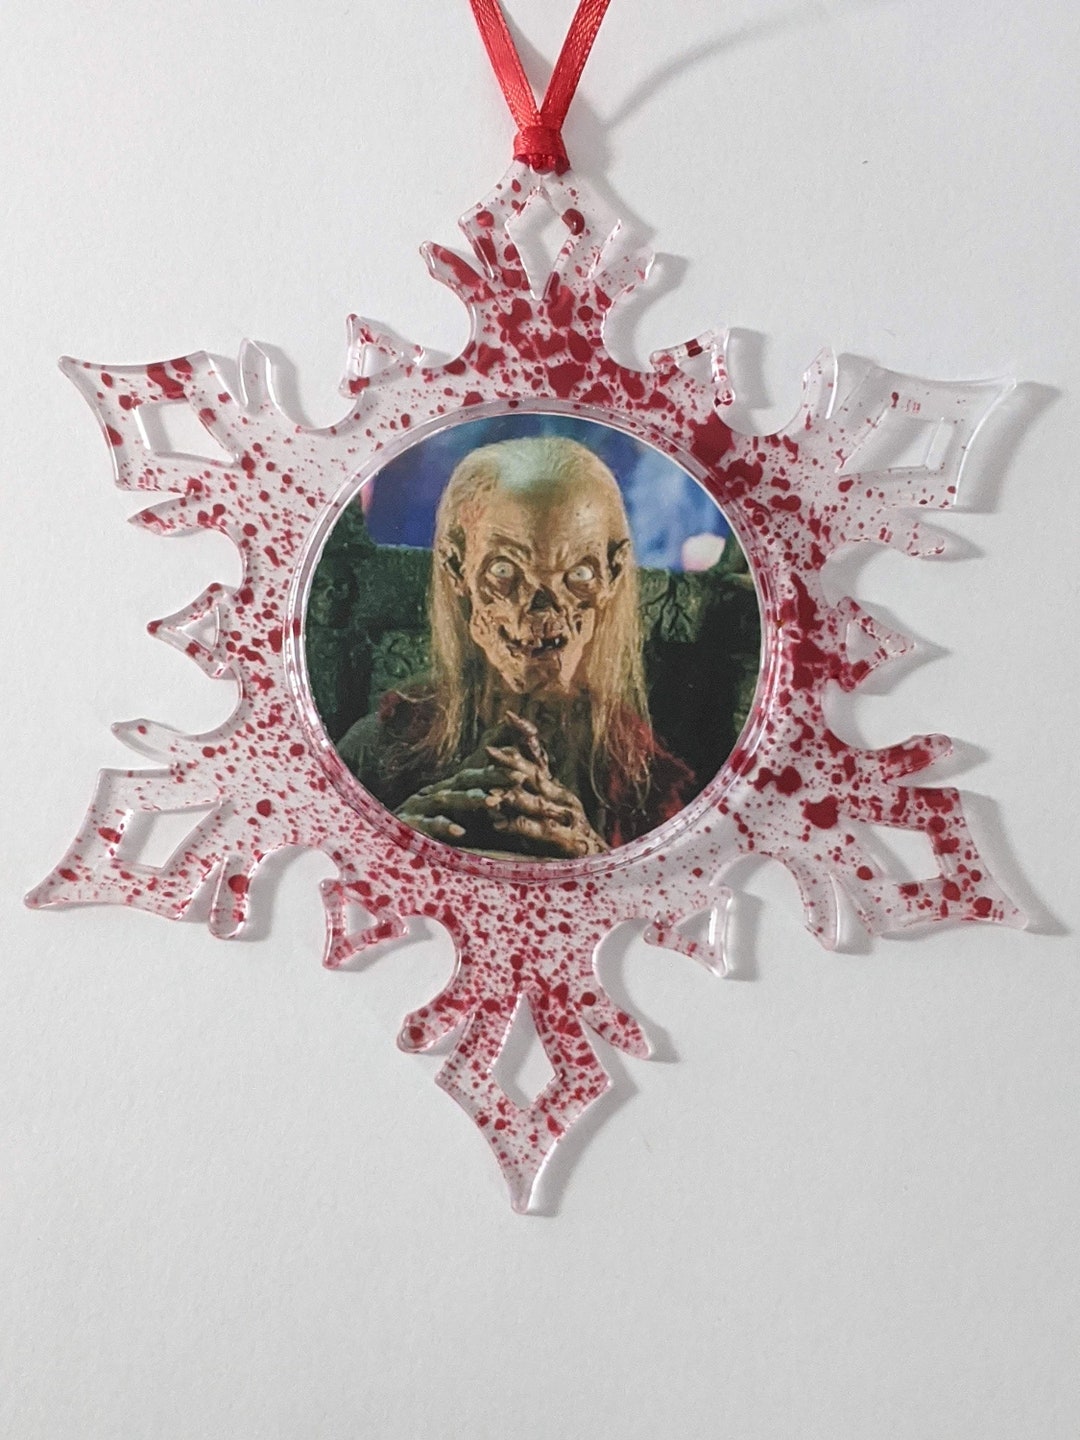 8 Large plastic Acrylic Snowflakes Ornaments Various Sizes